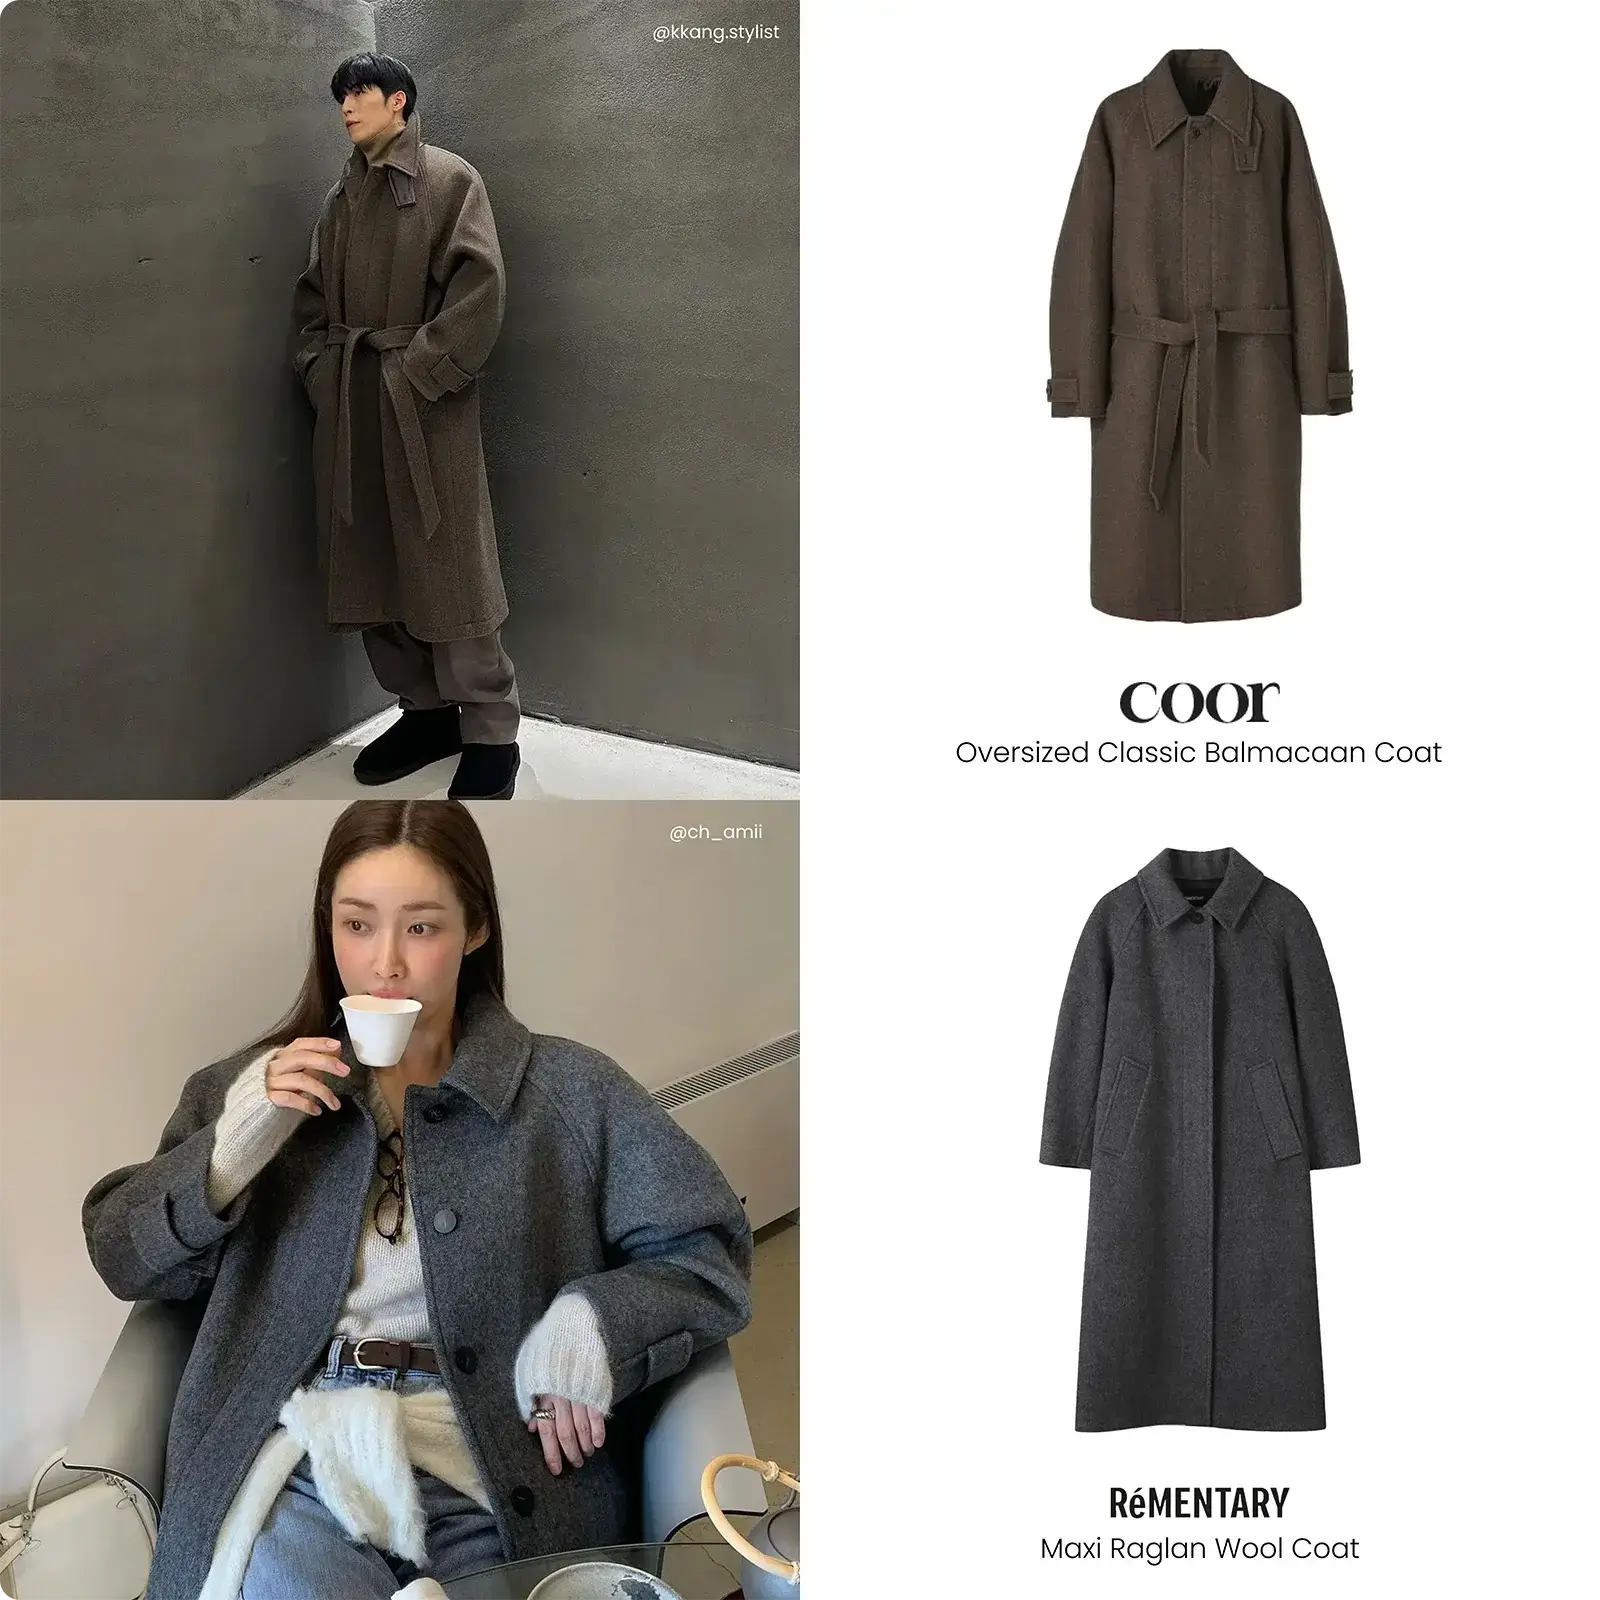 Korean balmacaan coats from Coor and Rementary